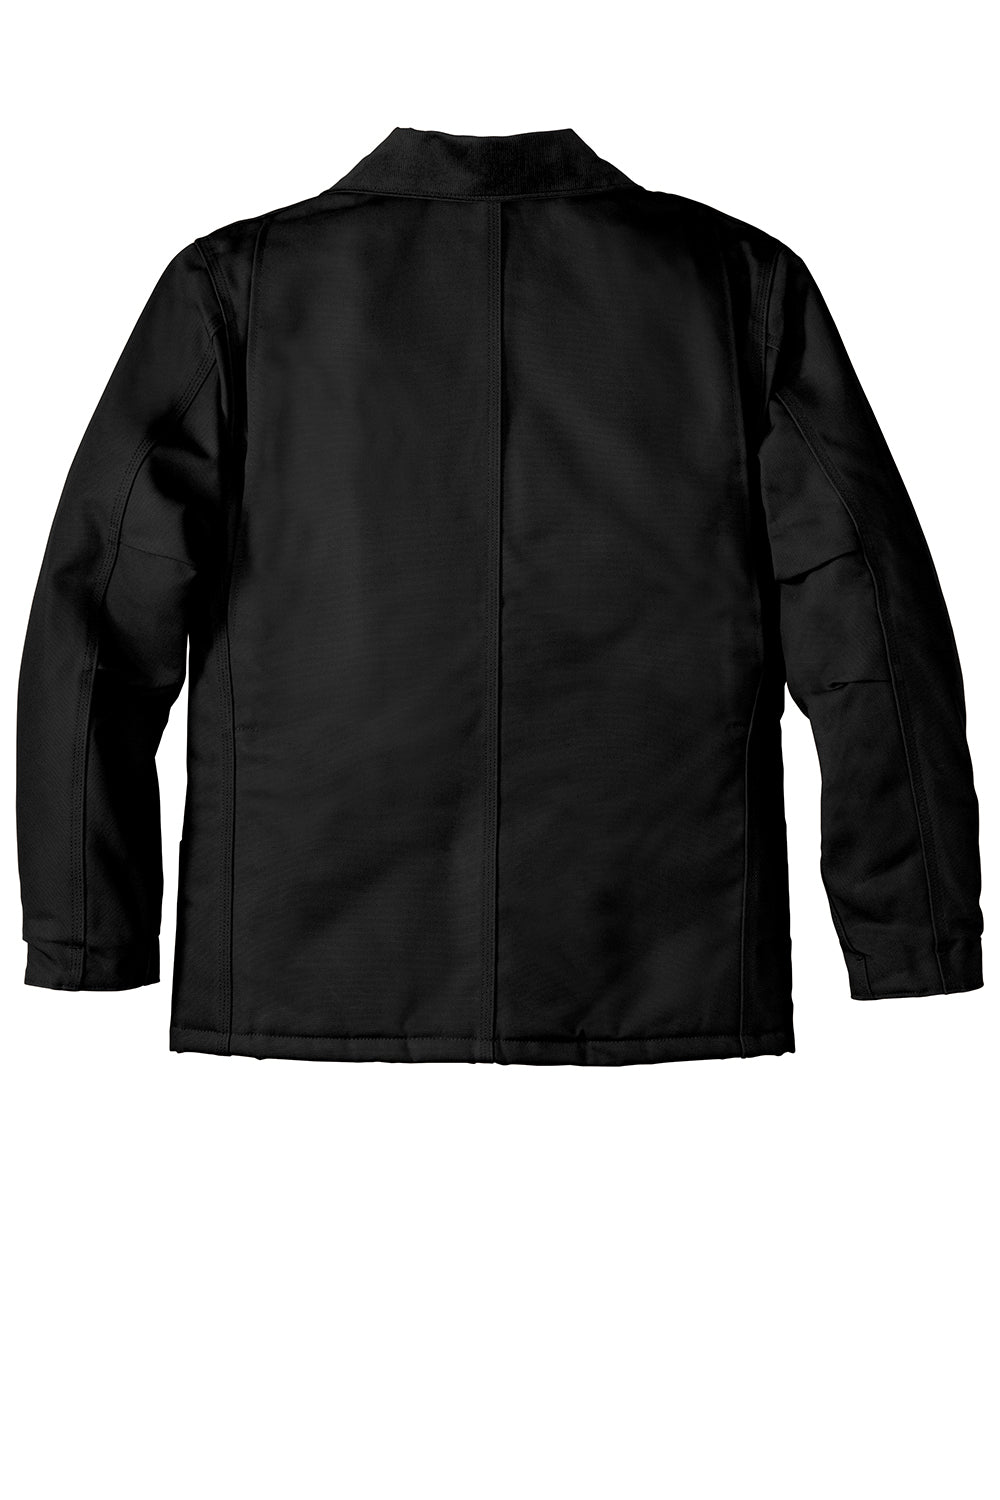 Carhartt CTC003/CTTC003 Mens Wind & Water Resistant Duck Cloth Full Zip Jacket Black Flat Back